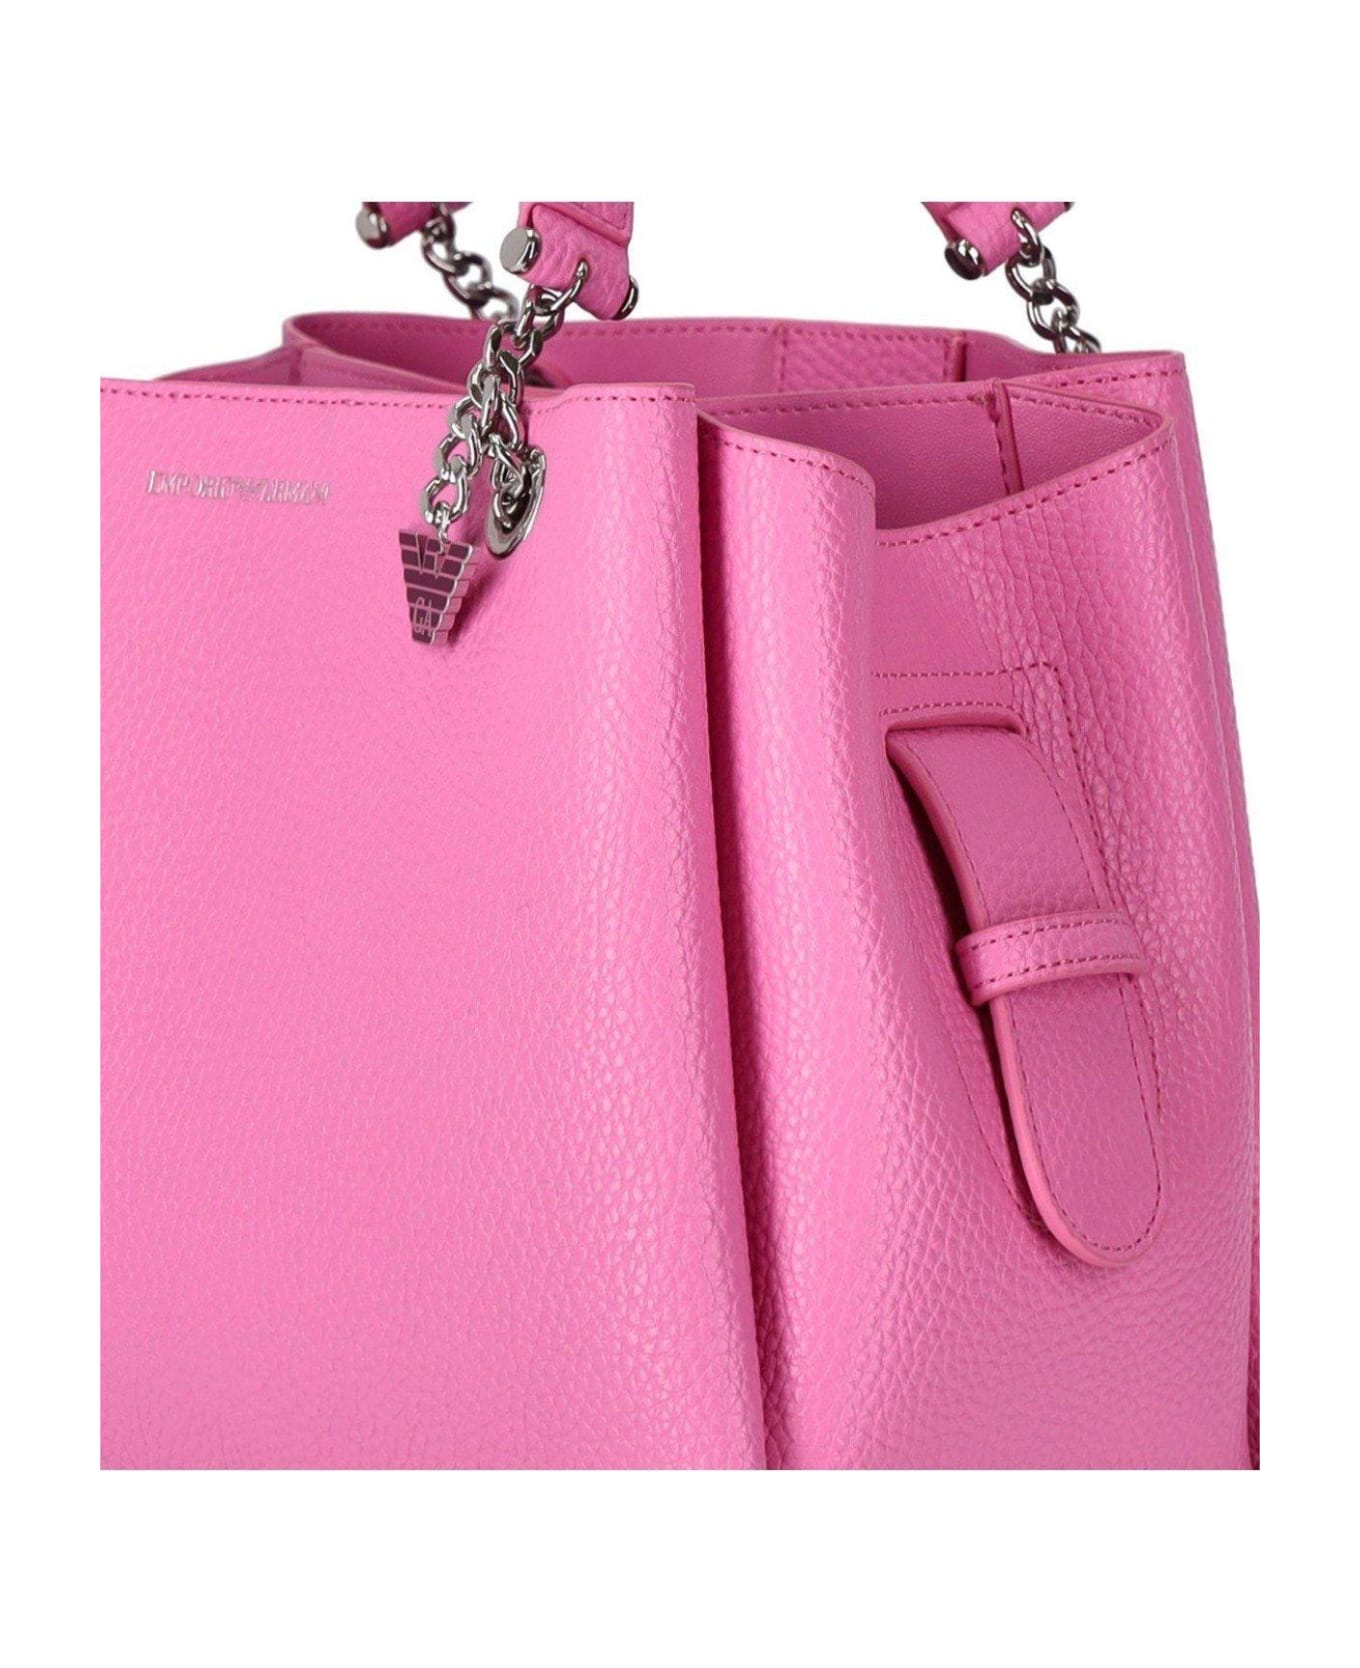 Emporio Armani Logo Printed Charm Tote Bag - Dark Pink Rosa